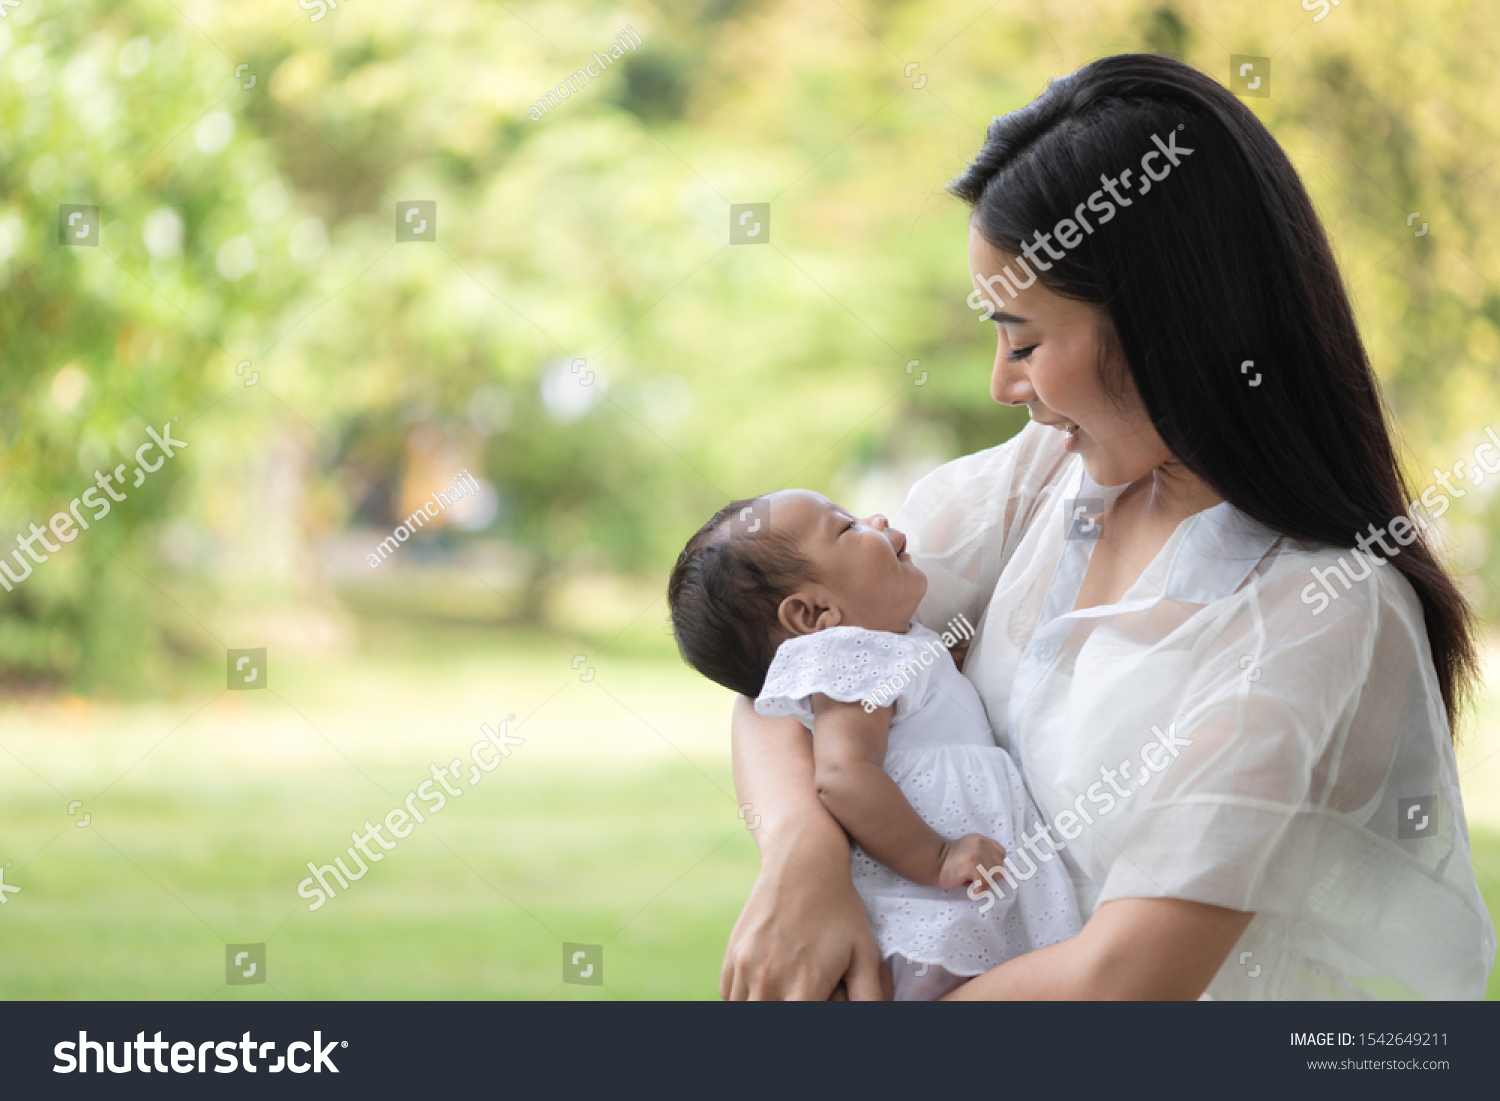 single mom with newborn